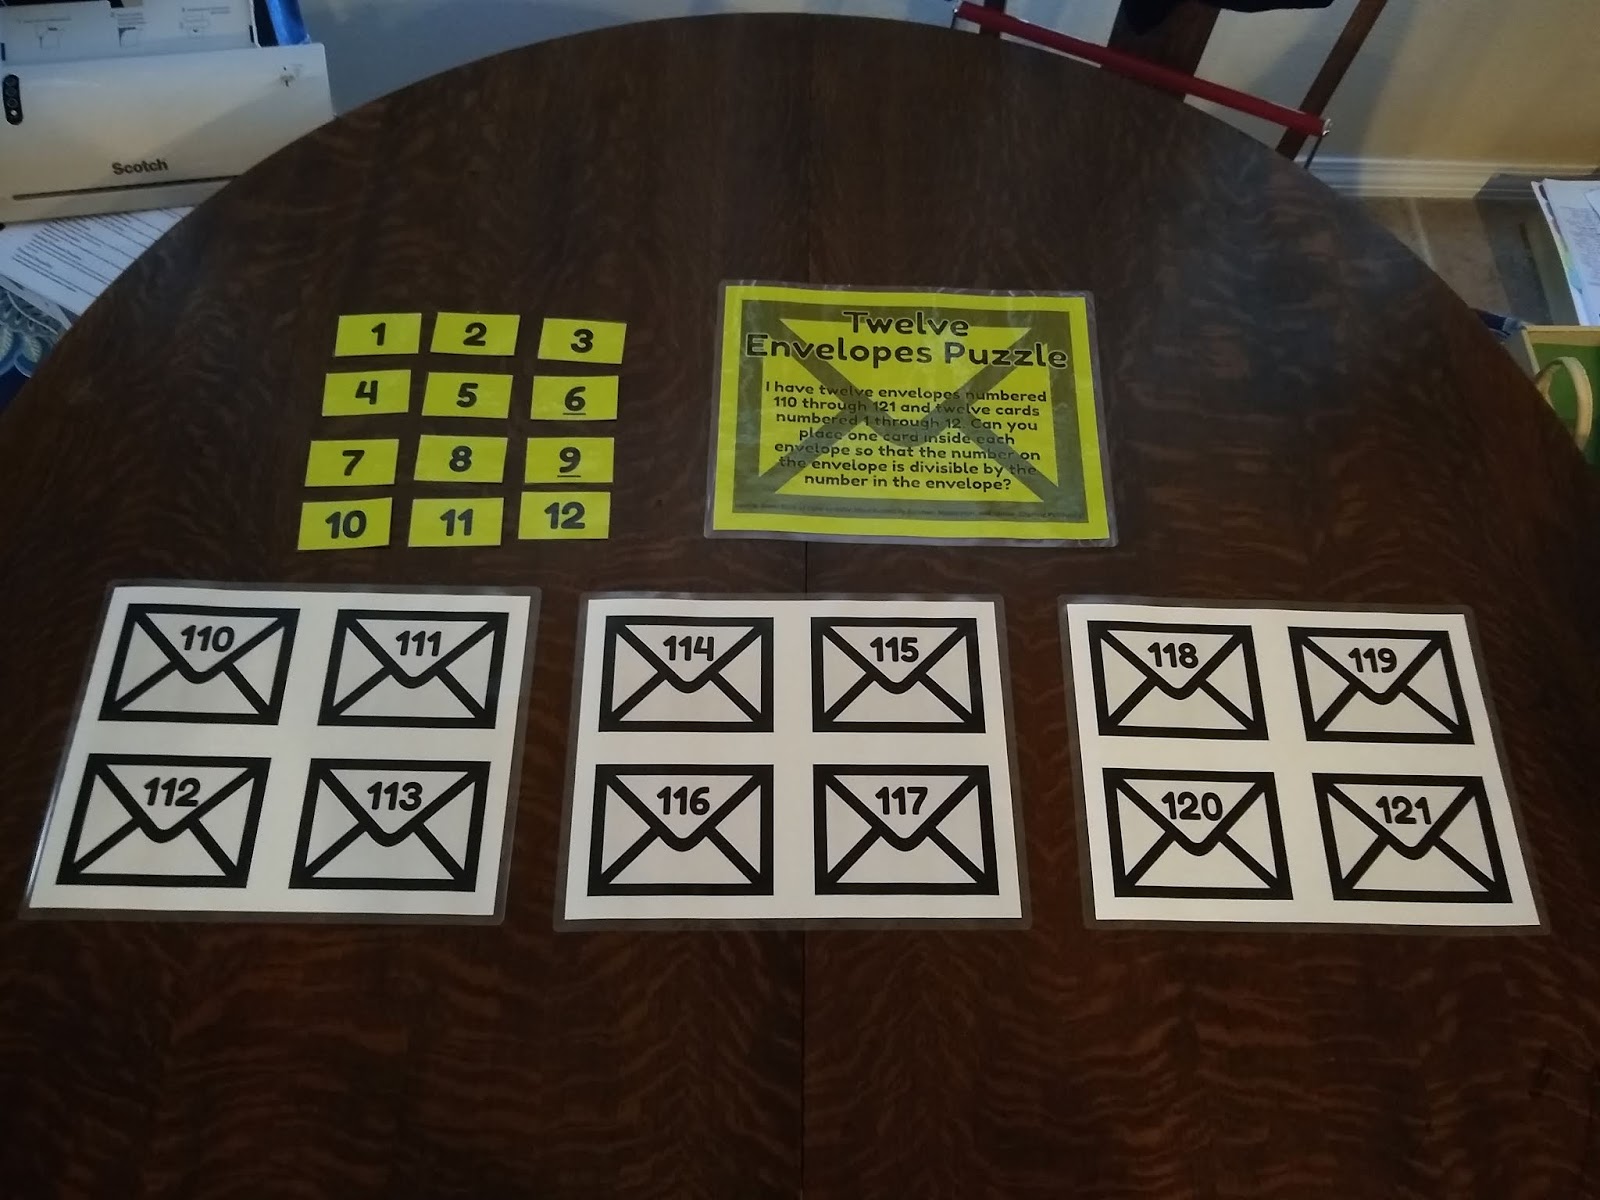 Twelve Envelopes Puzzle